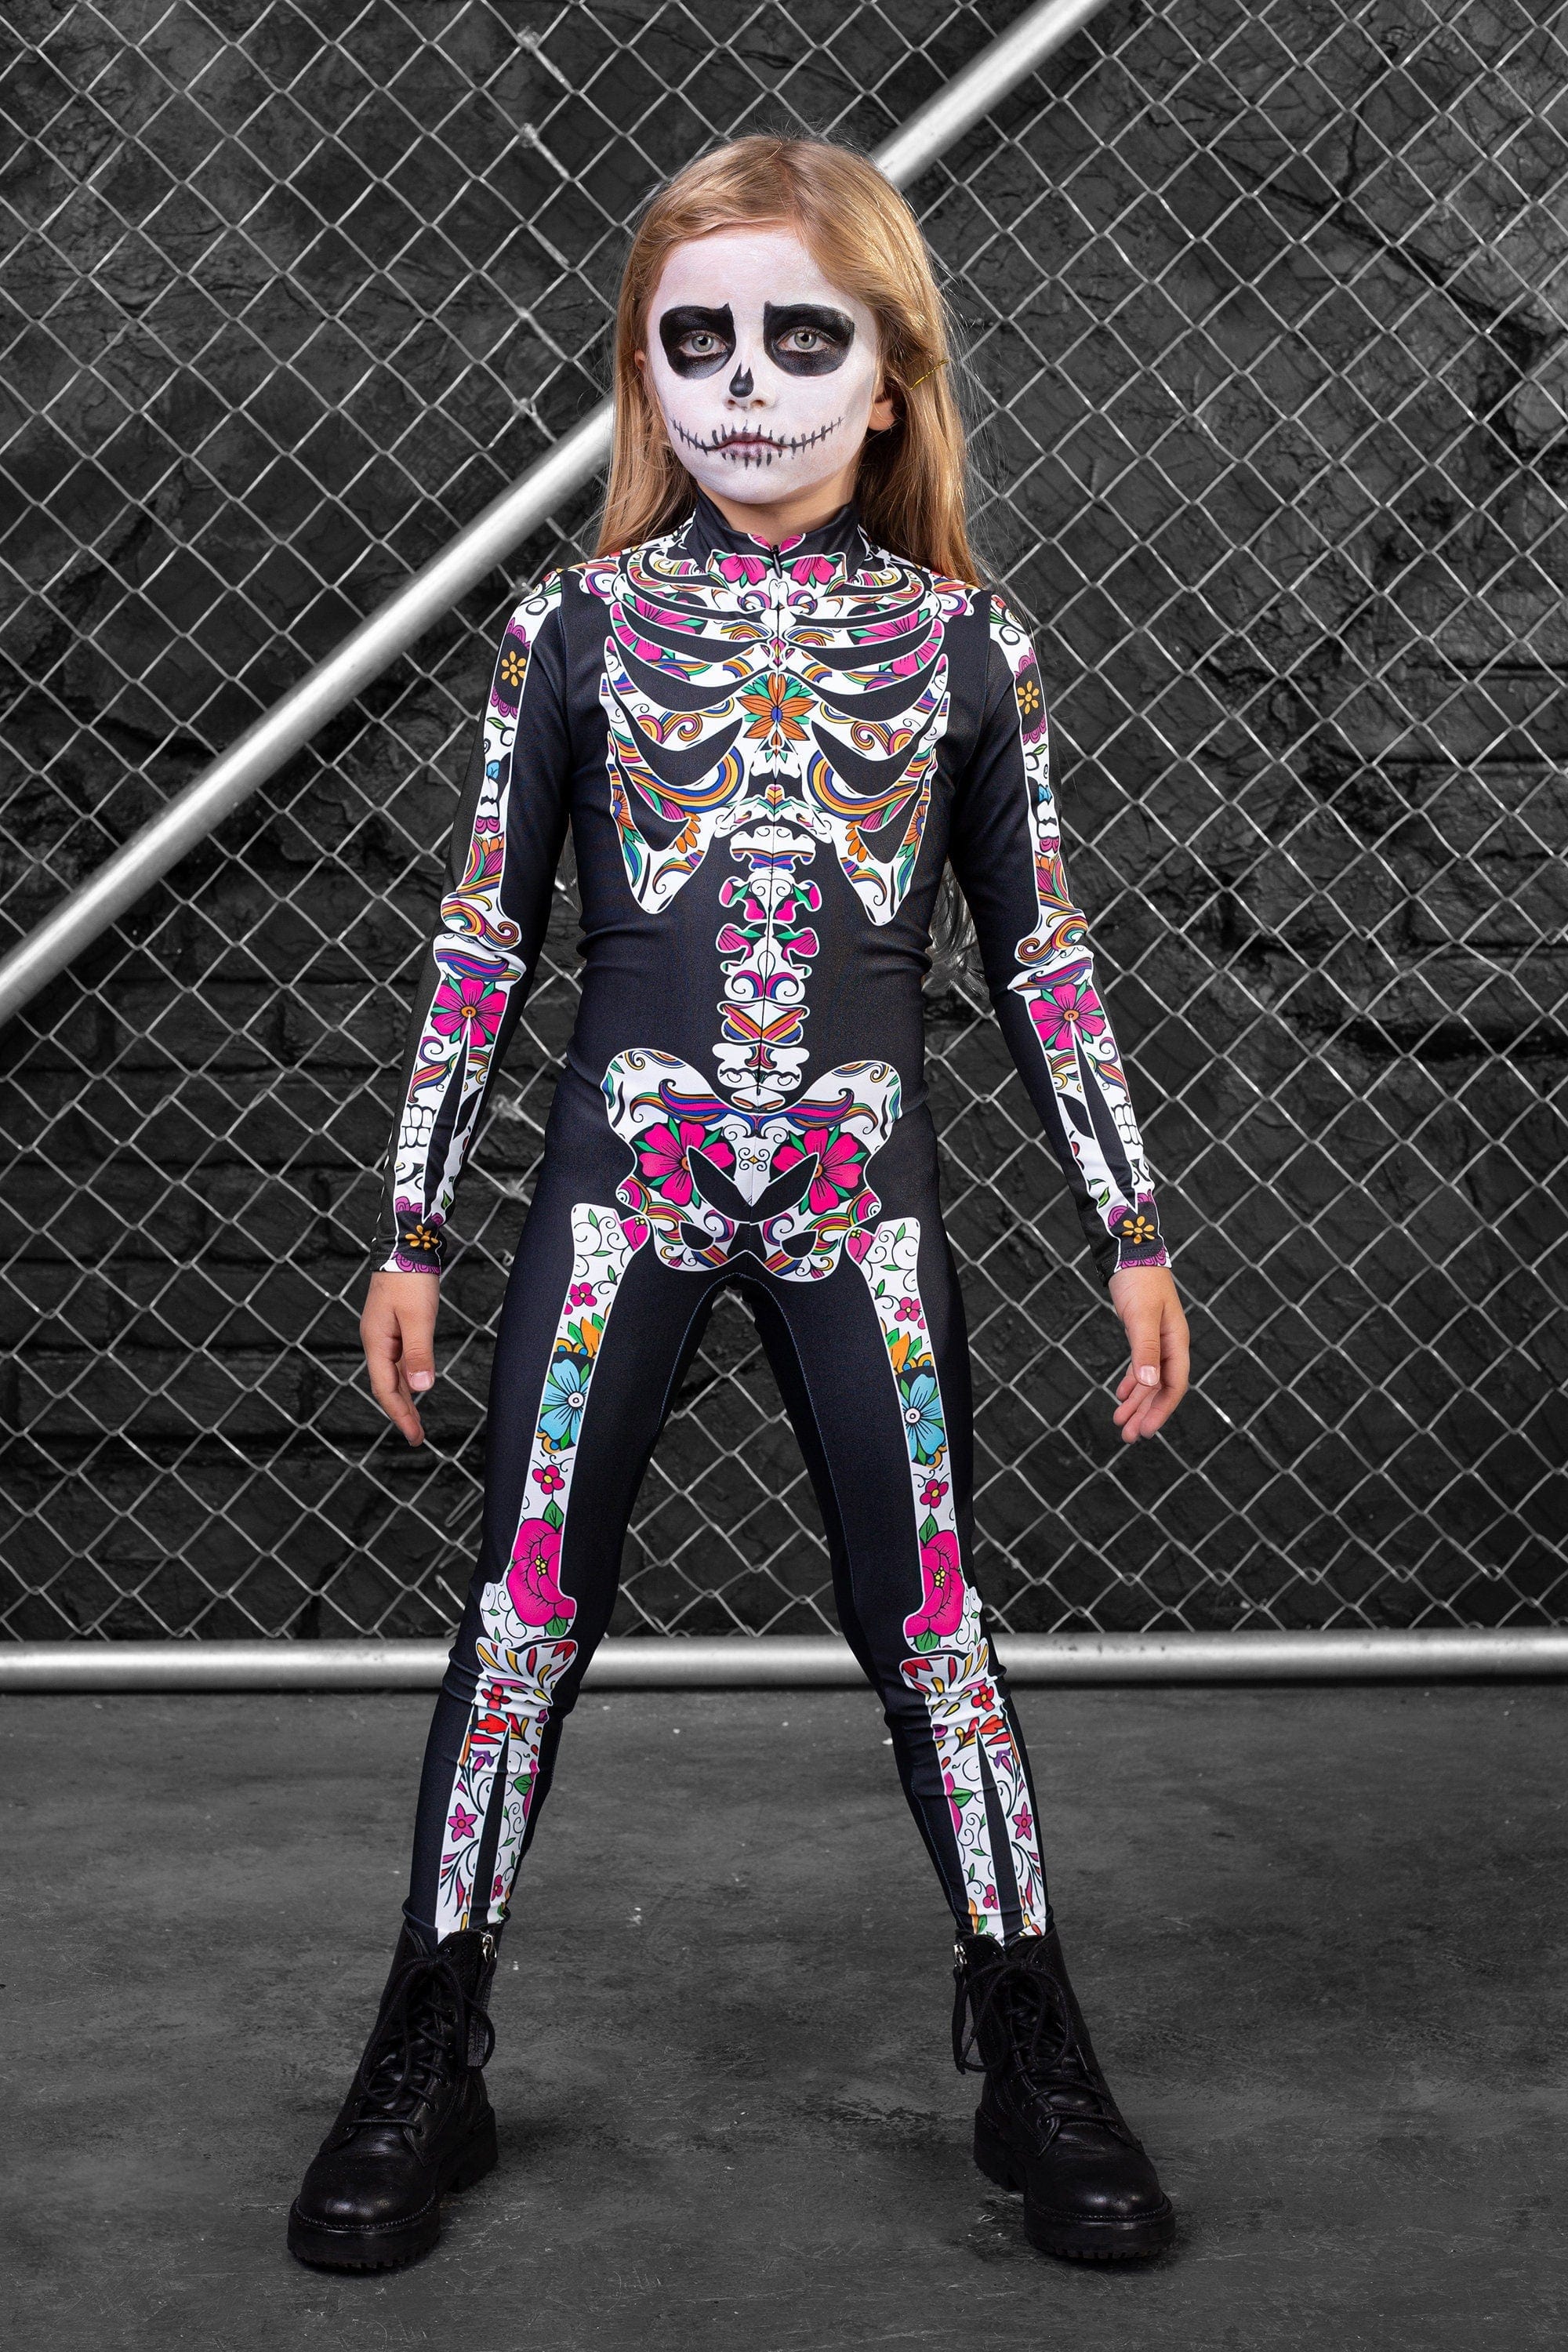 Girls Bohemian Skeleton Costume